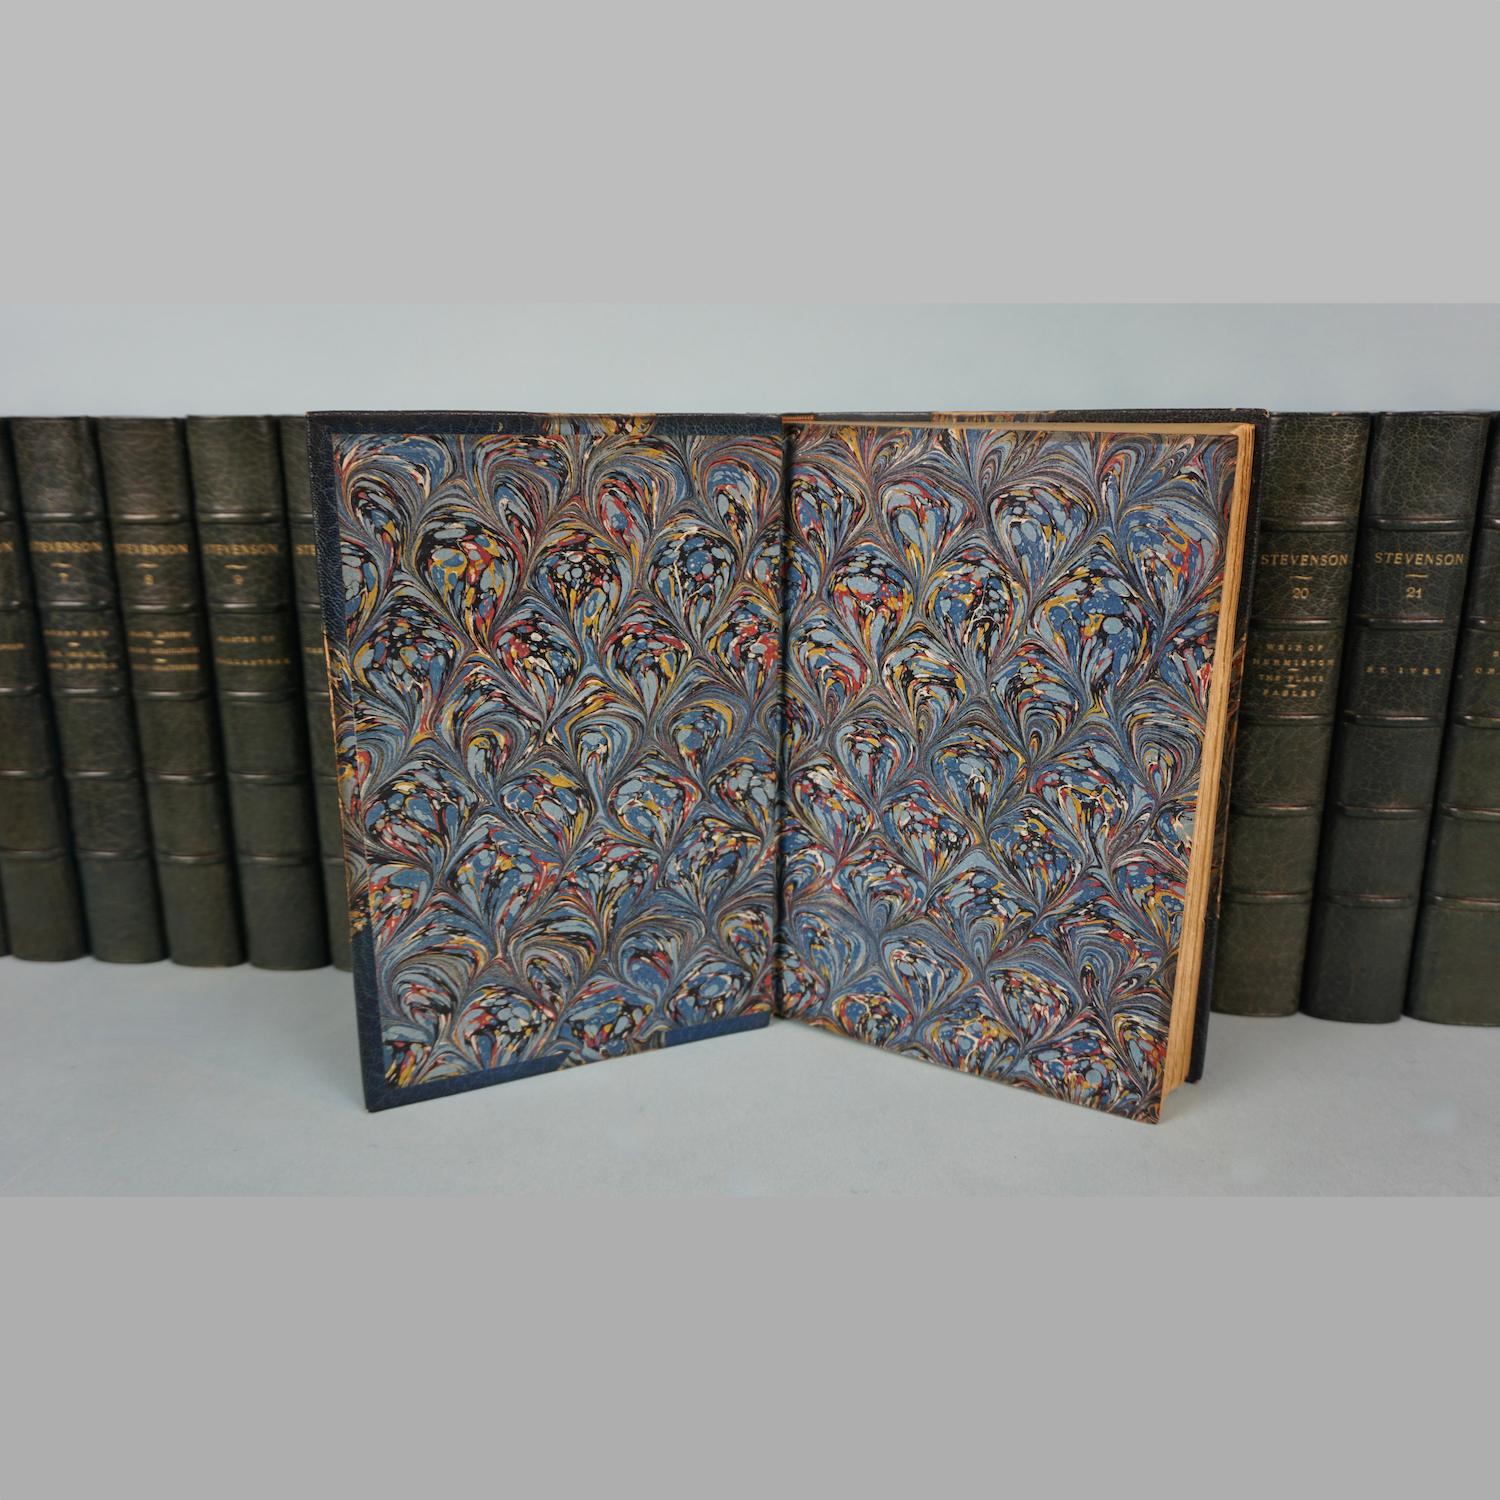 American Fine Set of Robert Louis Stevenson's Works in 26 Blue Leatherbound Volumes